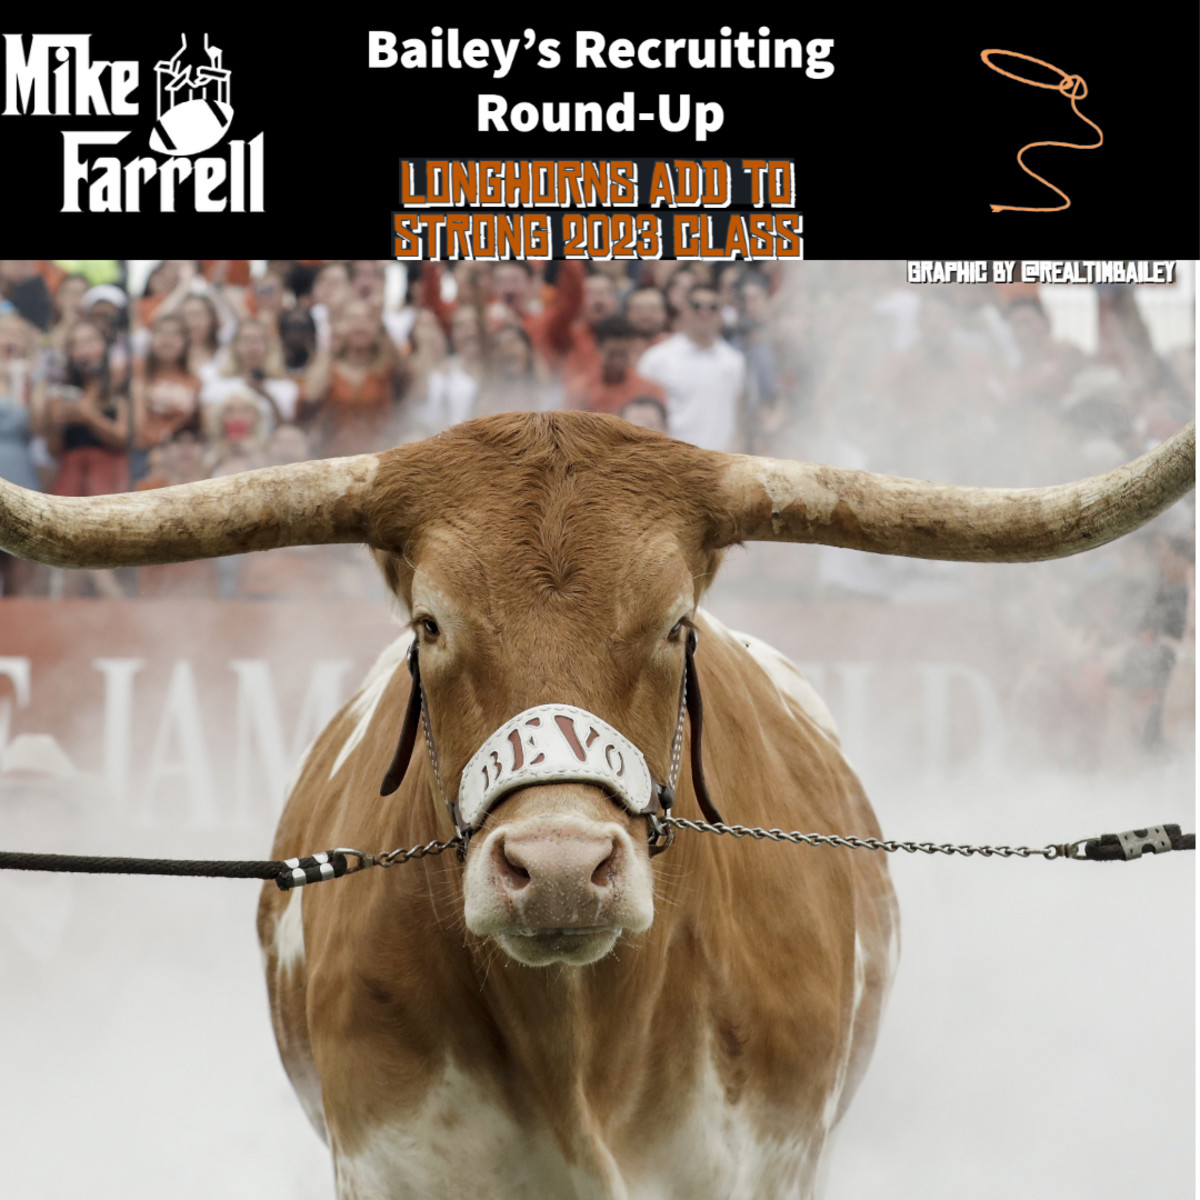 recruiting round-up Texas